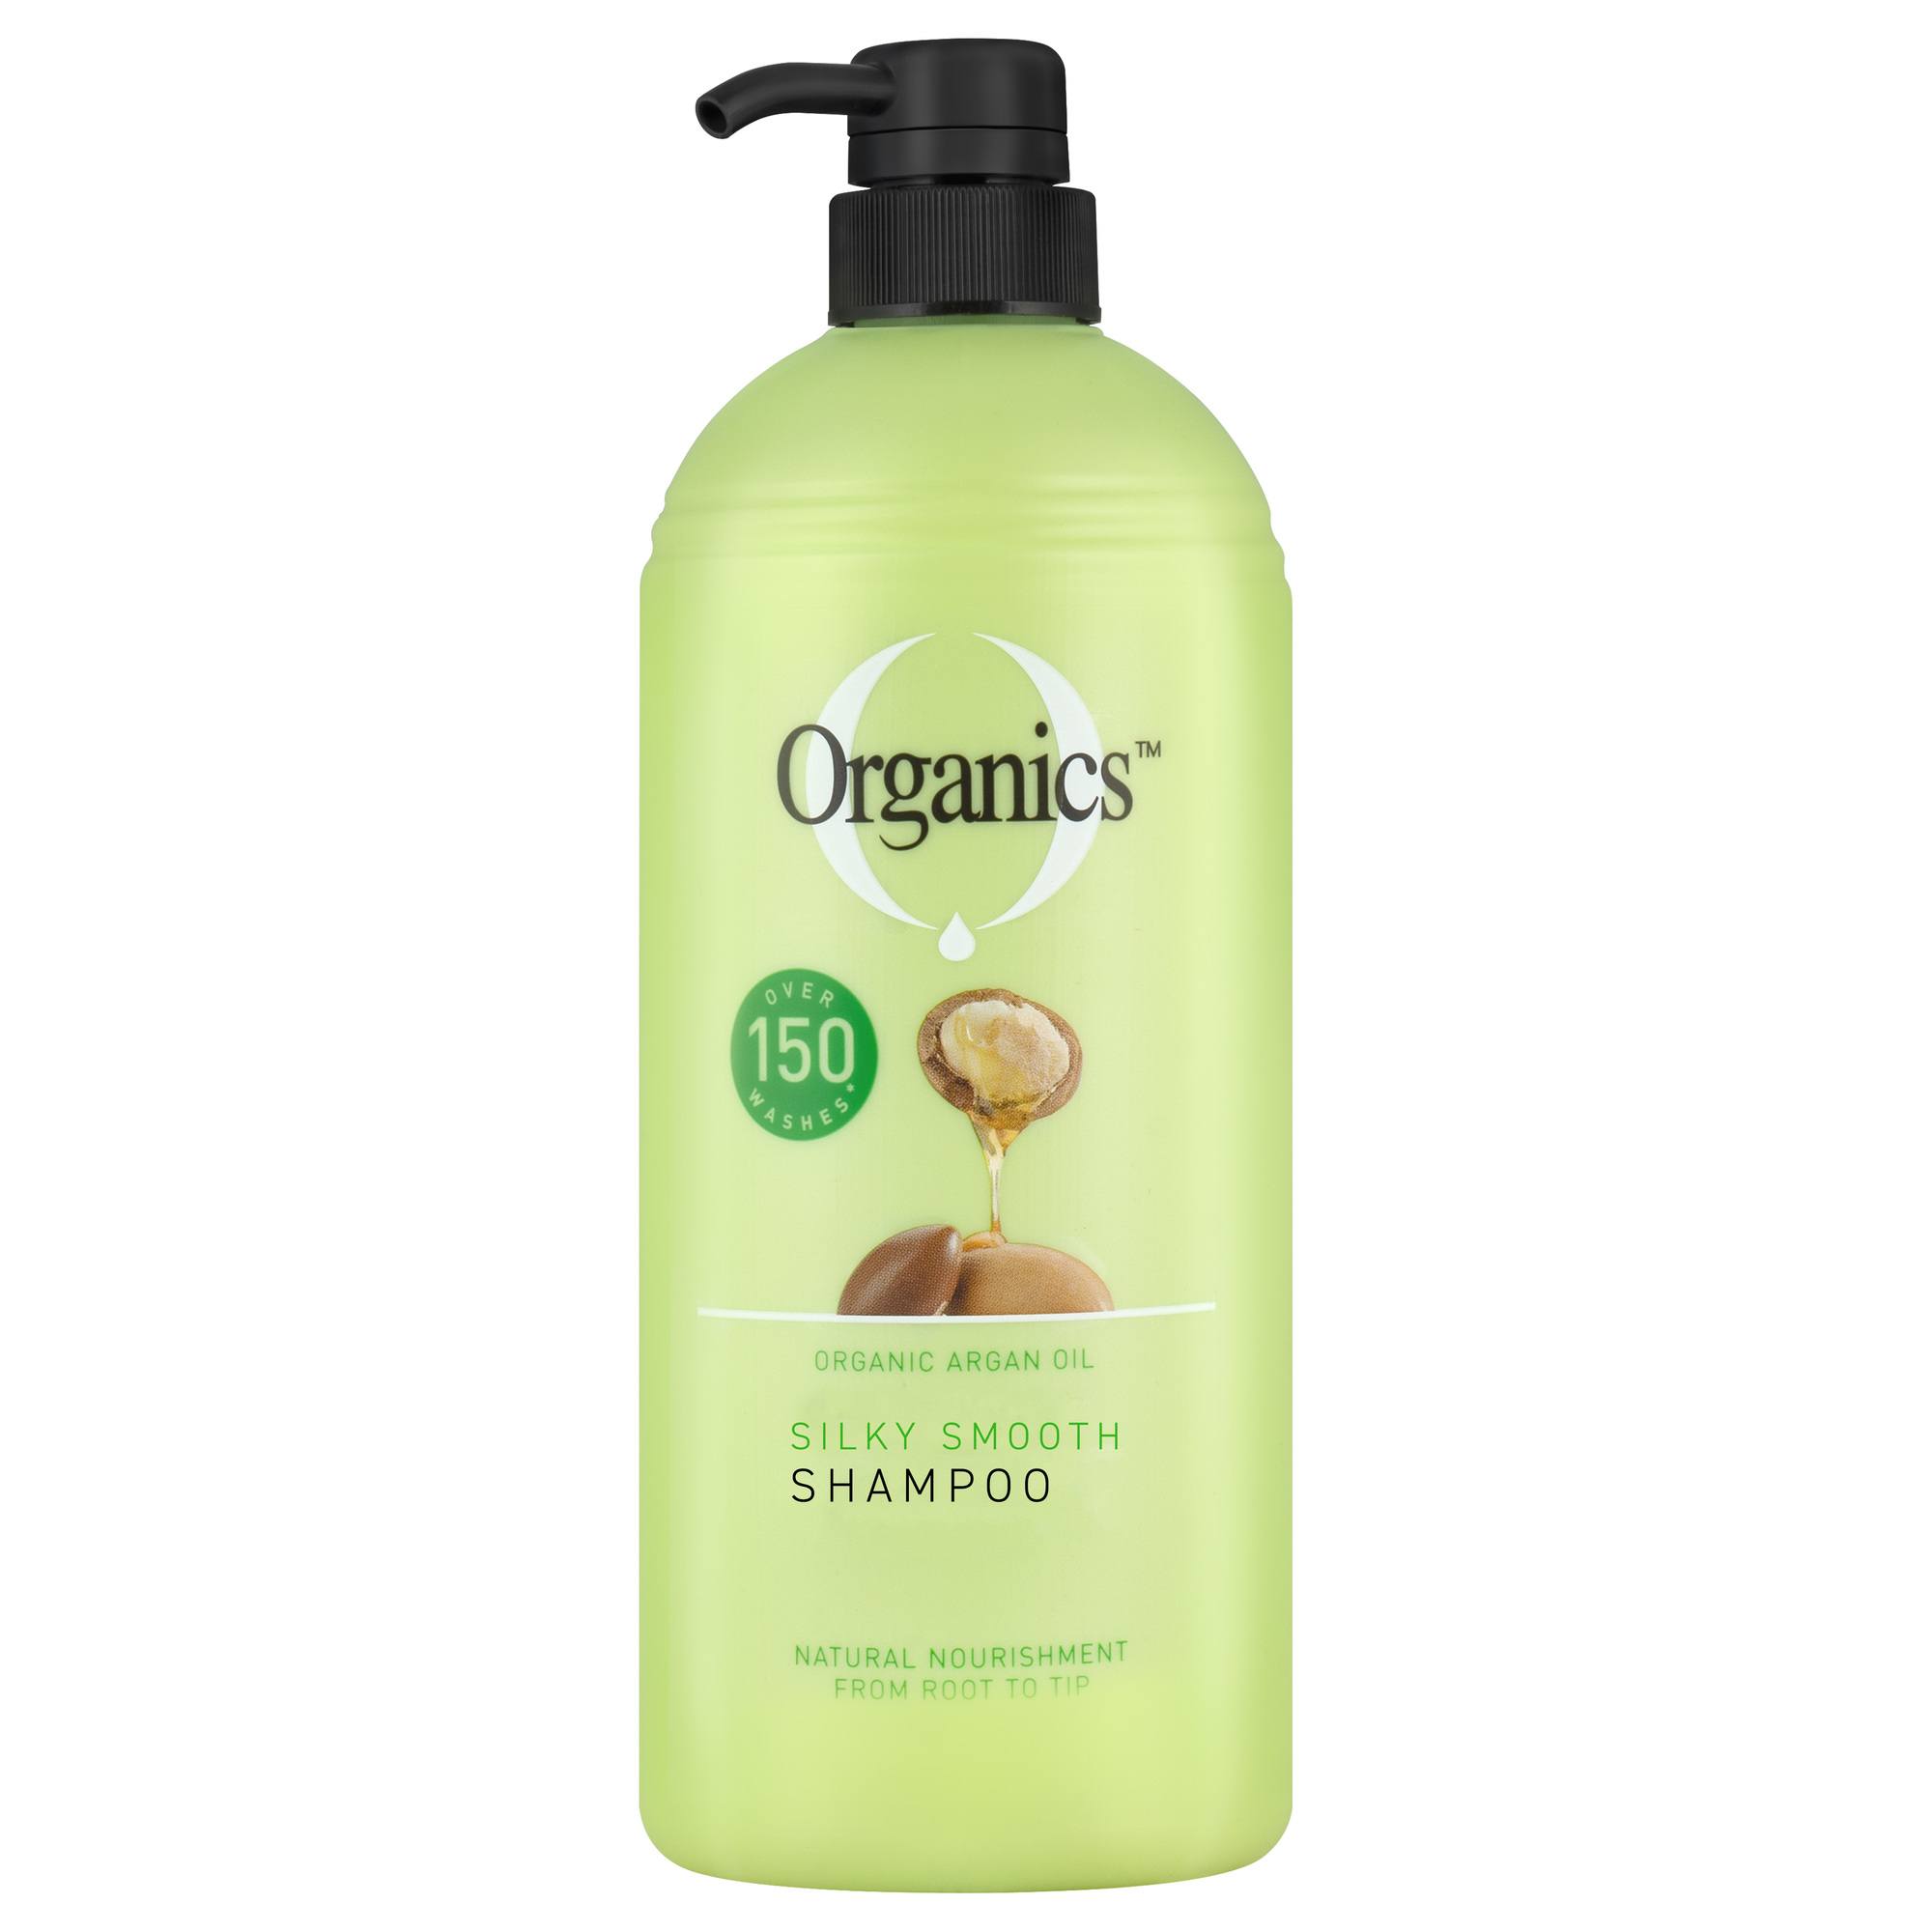 Organics Silky Smooth Shampoo - All Things Hair